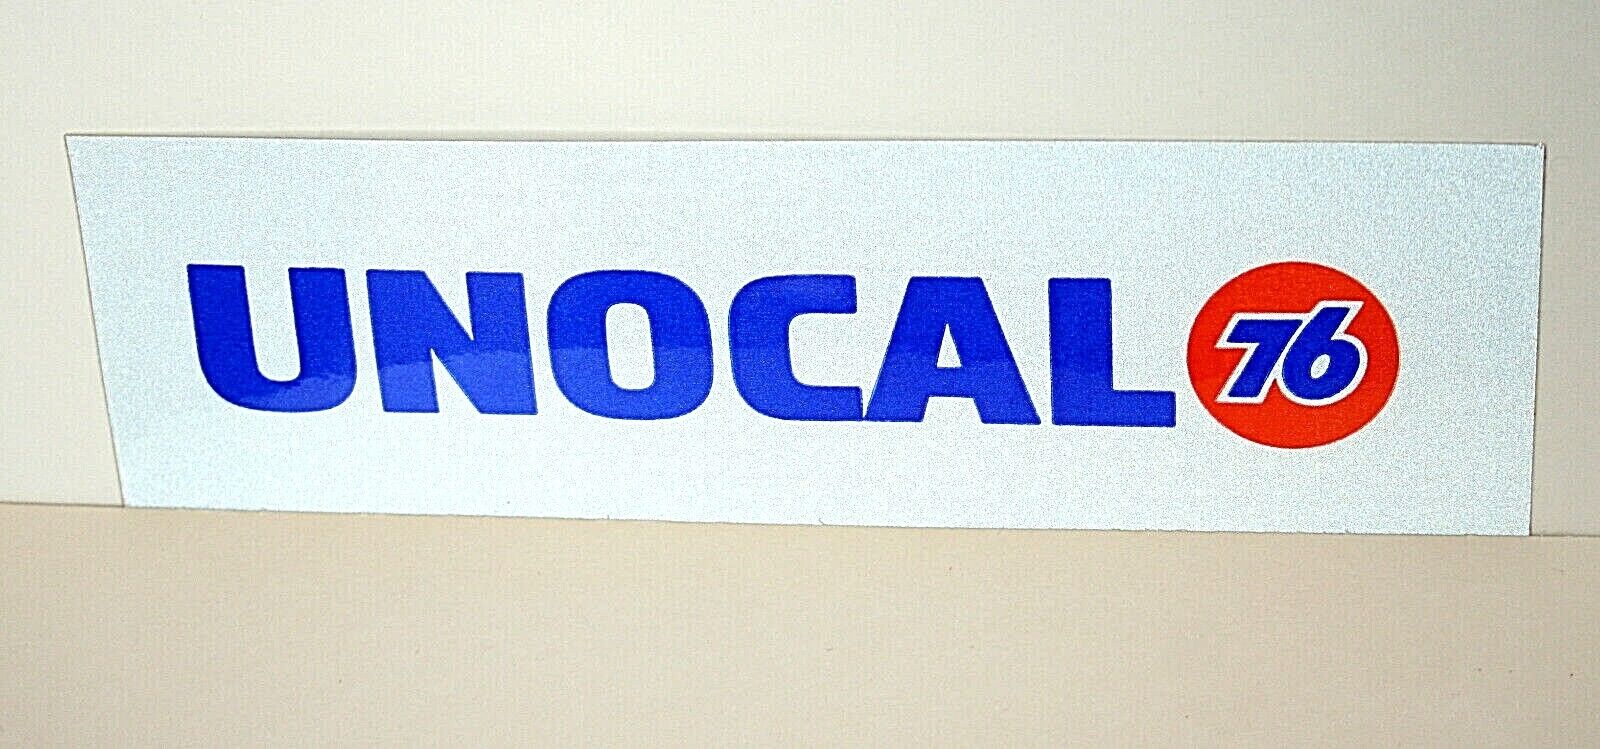 Vintage Unocal 76 Union Oil & Gas Bumper Sticker New NOS 2000's 3